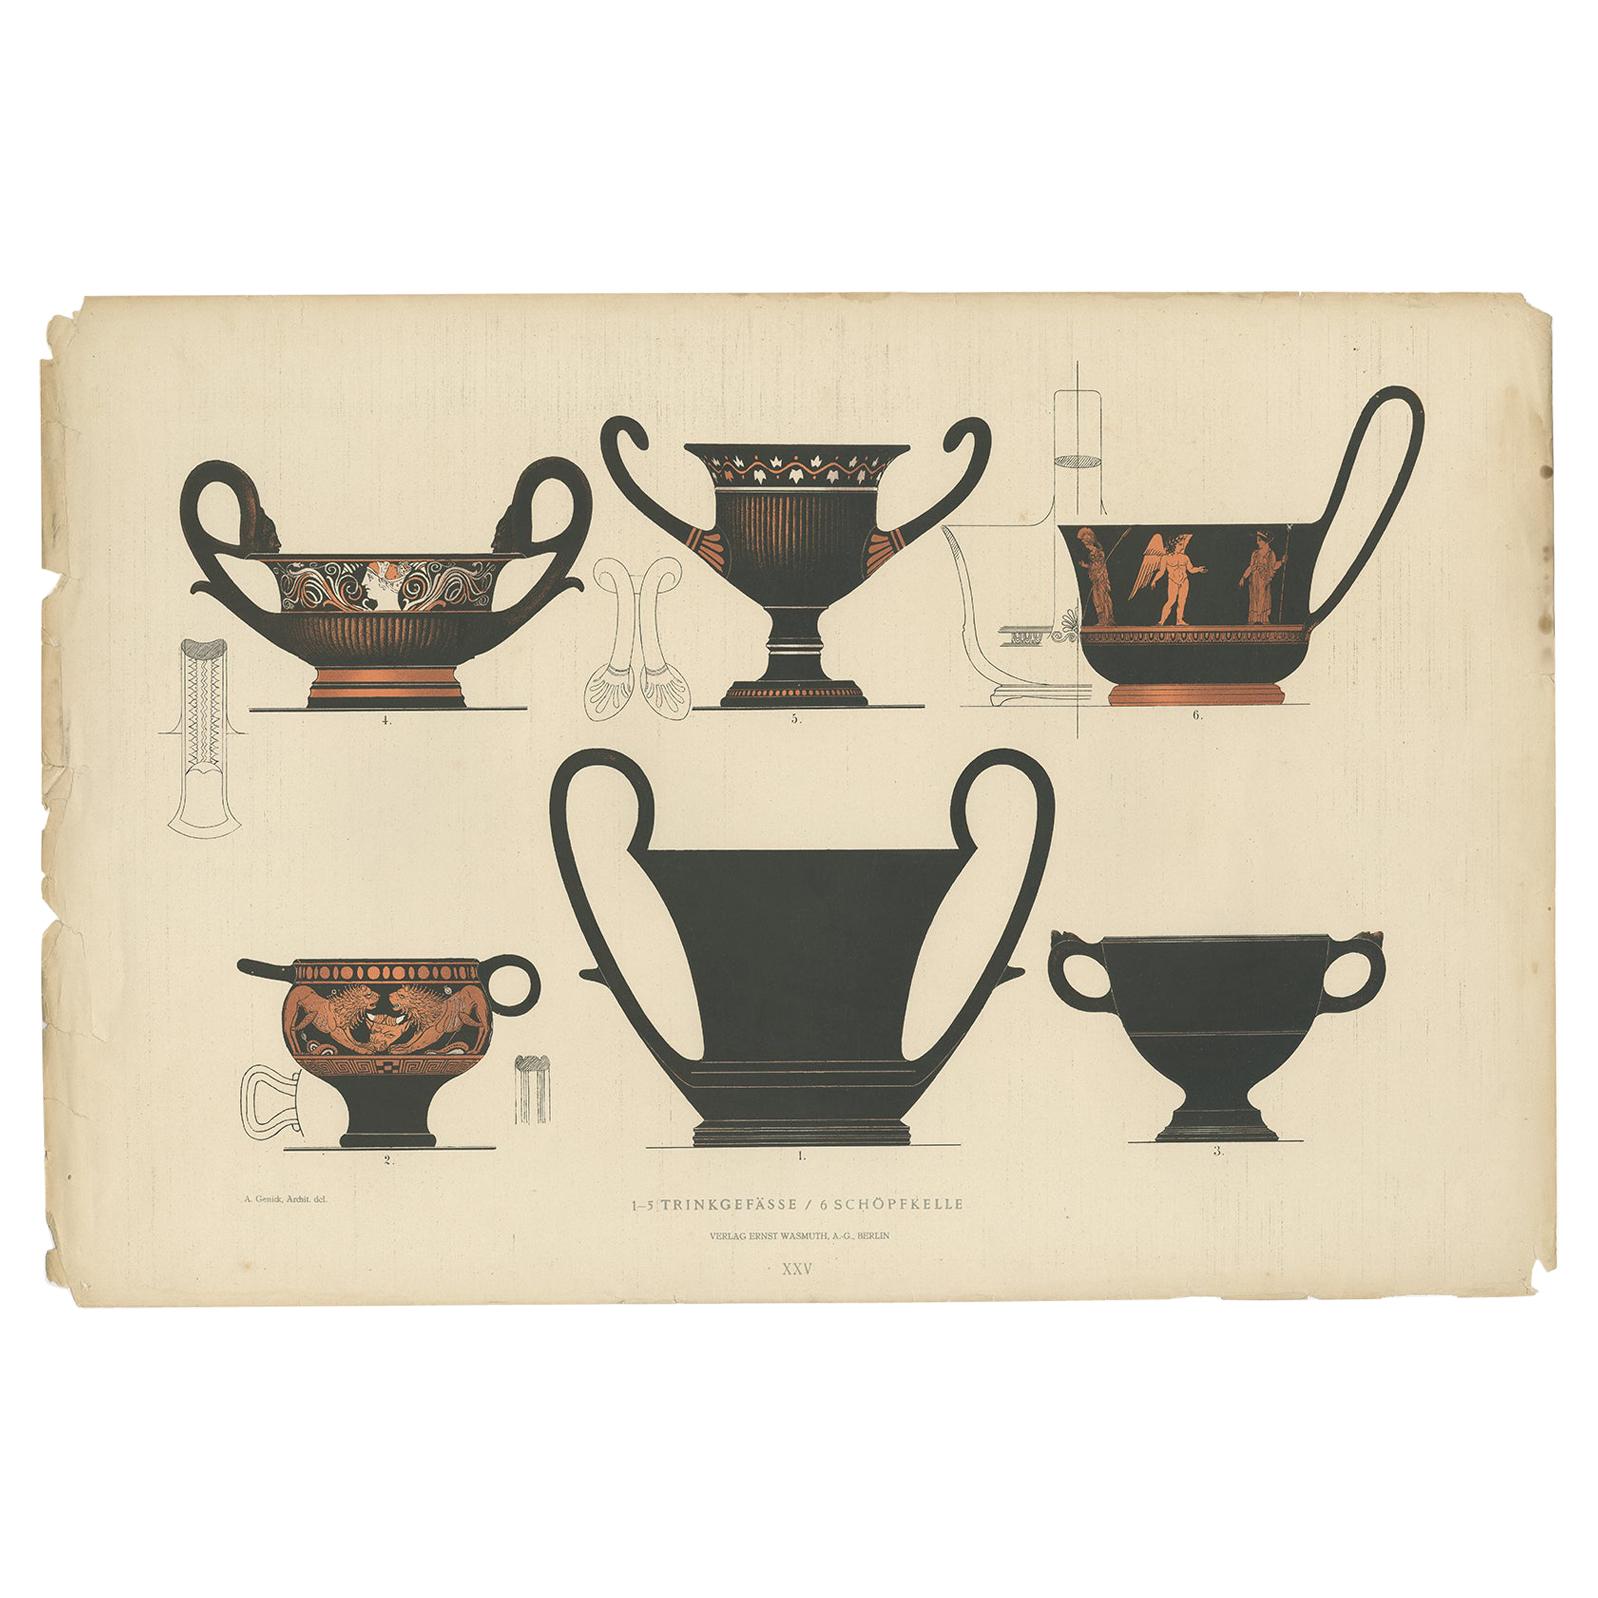 Antique Print of Greek Ceramics 'Trinkgefässe / Schöpfkelle' by Genick '1883'